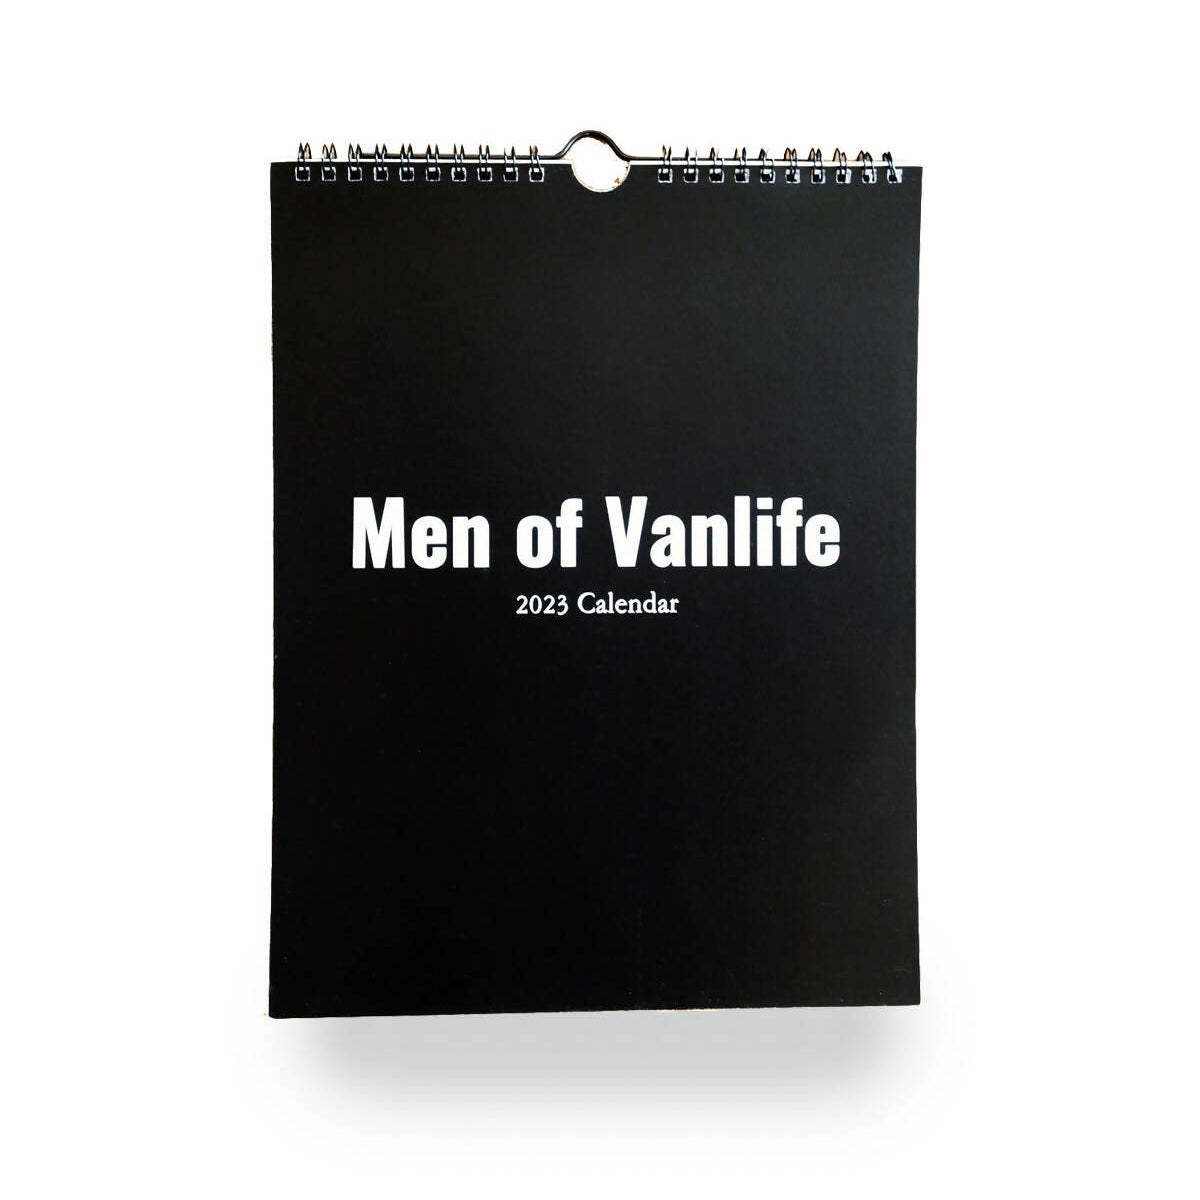 The Ultimate Vanlife Calendar for 2023